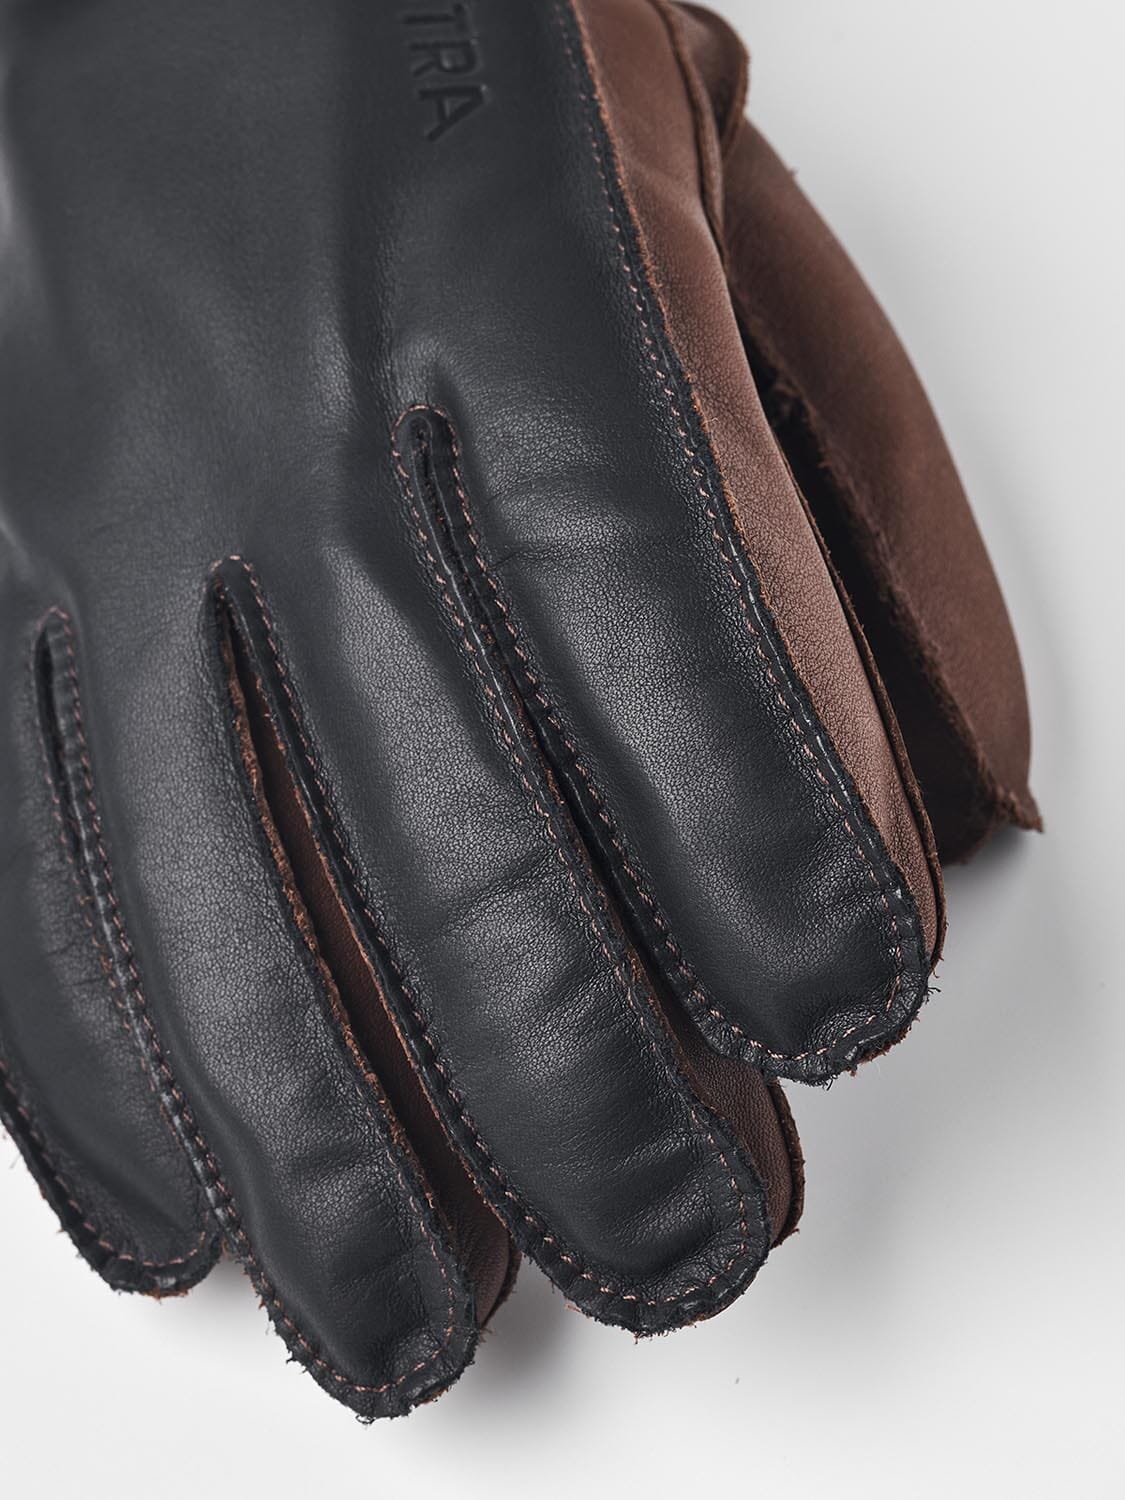 Wakayama 5 finger Glove Gloves Hestra 